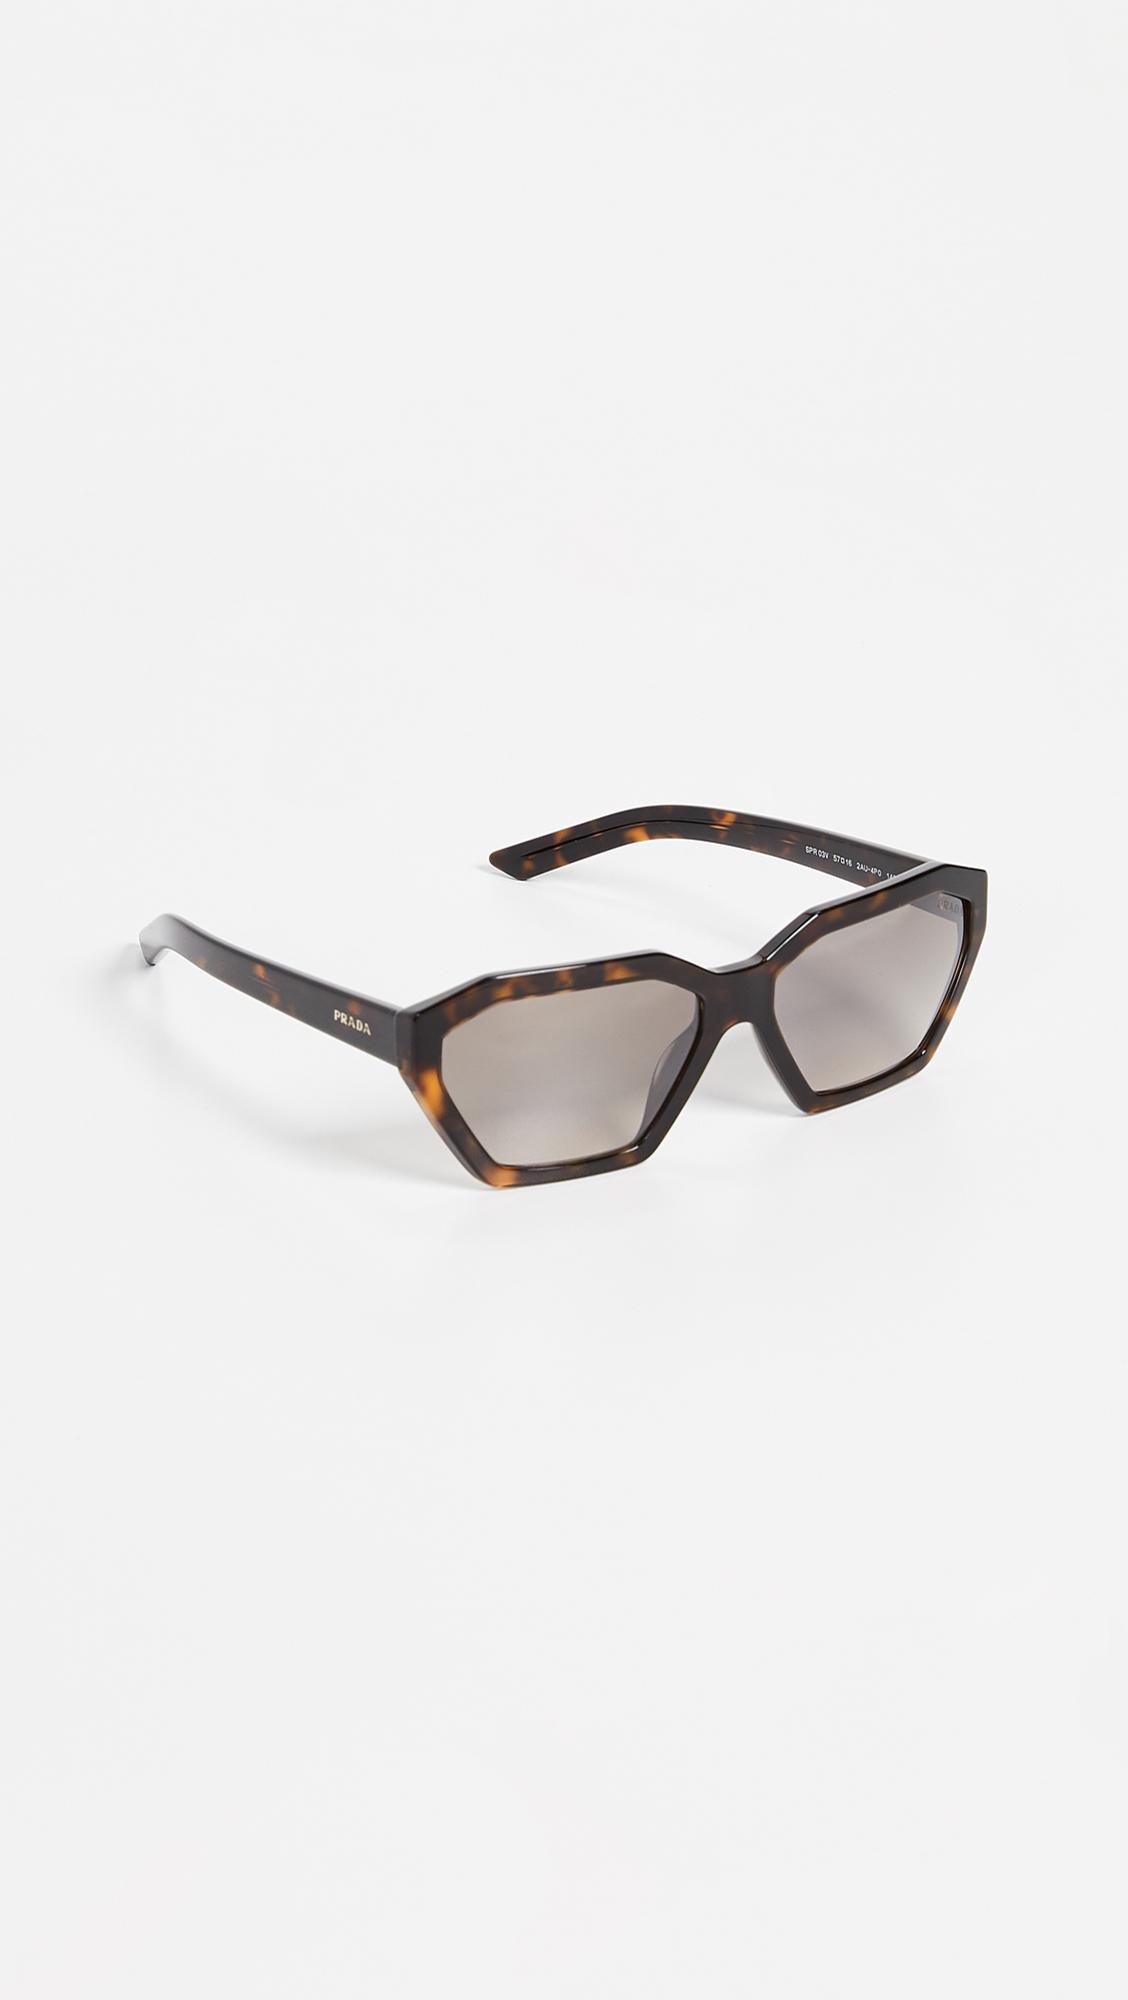 Prada Millennials Sunglasses Factory Sale, 56% OFF | www.ingeniovirtual.com